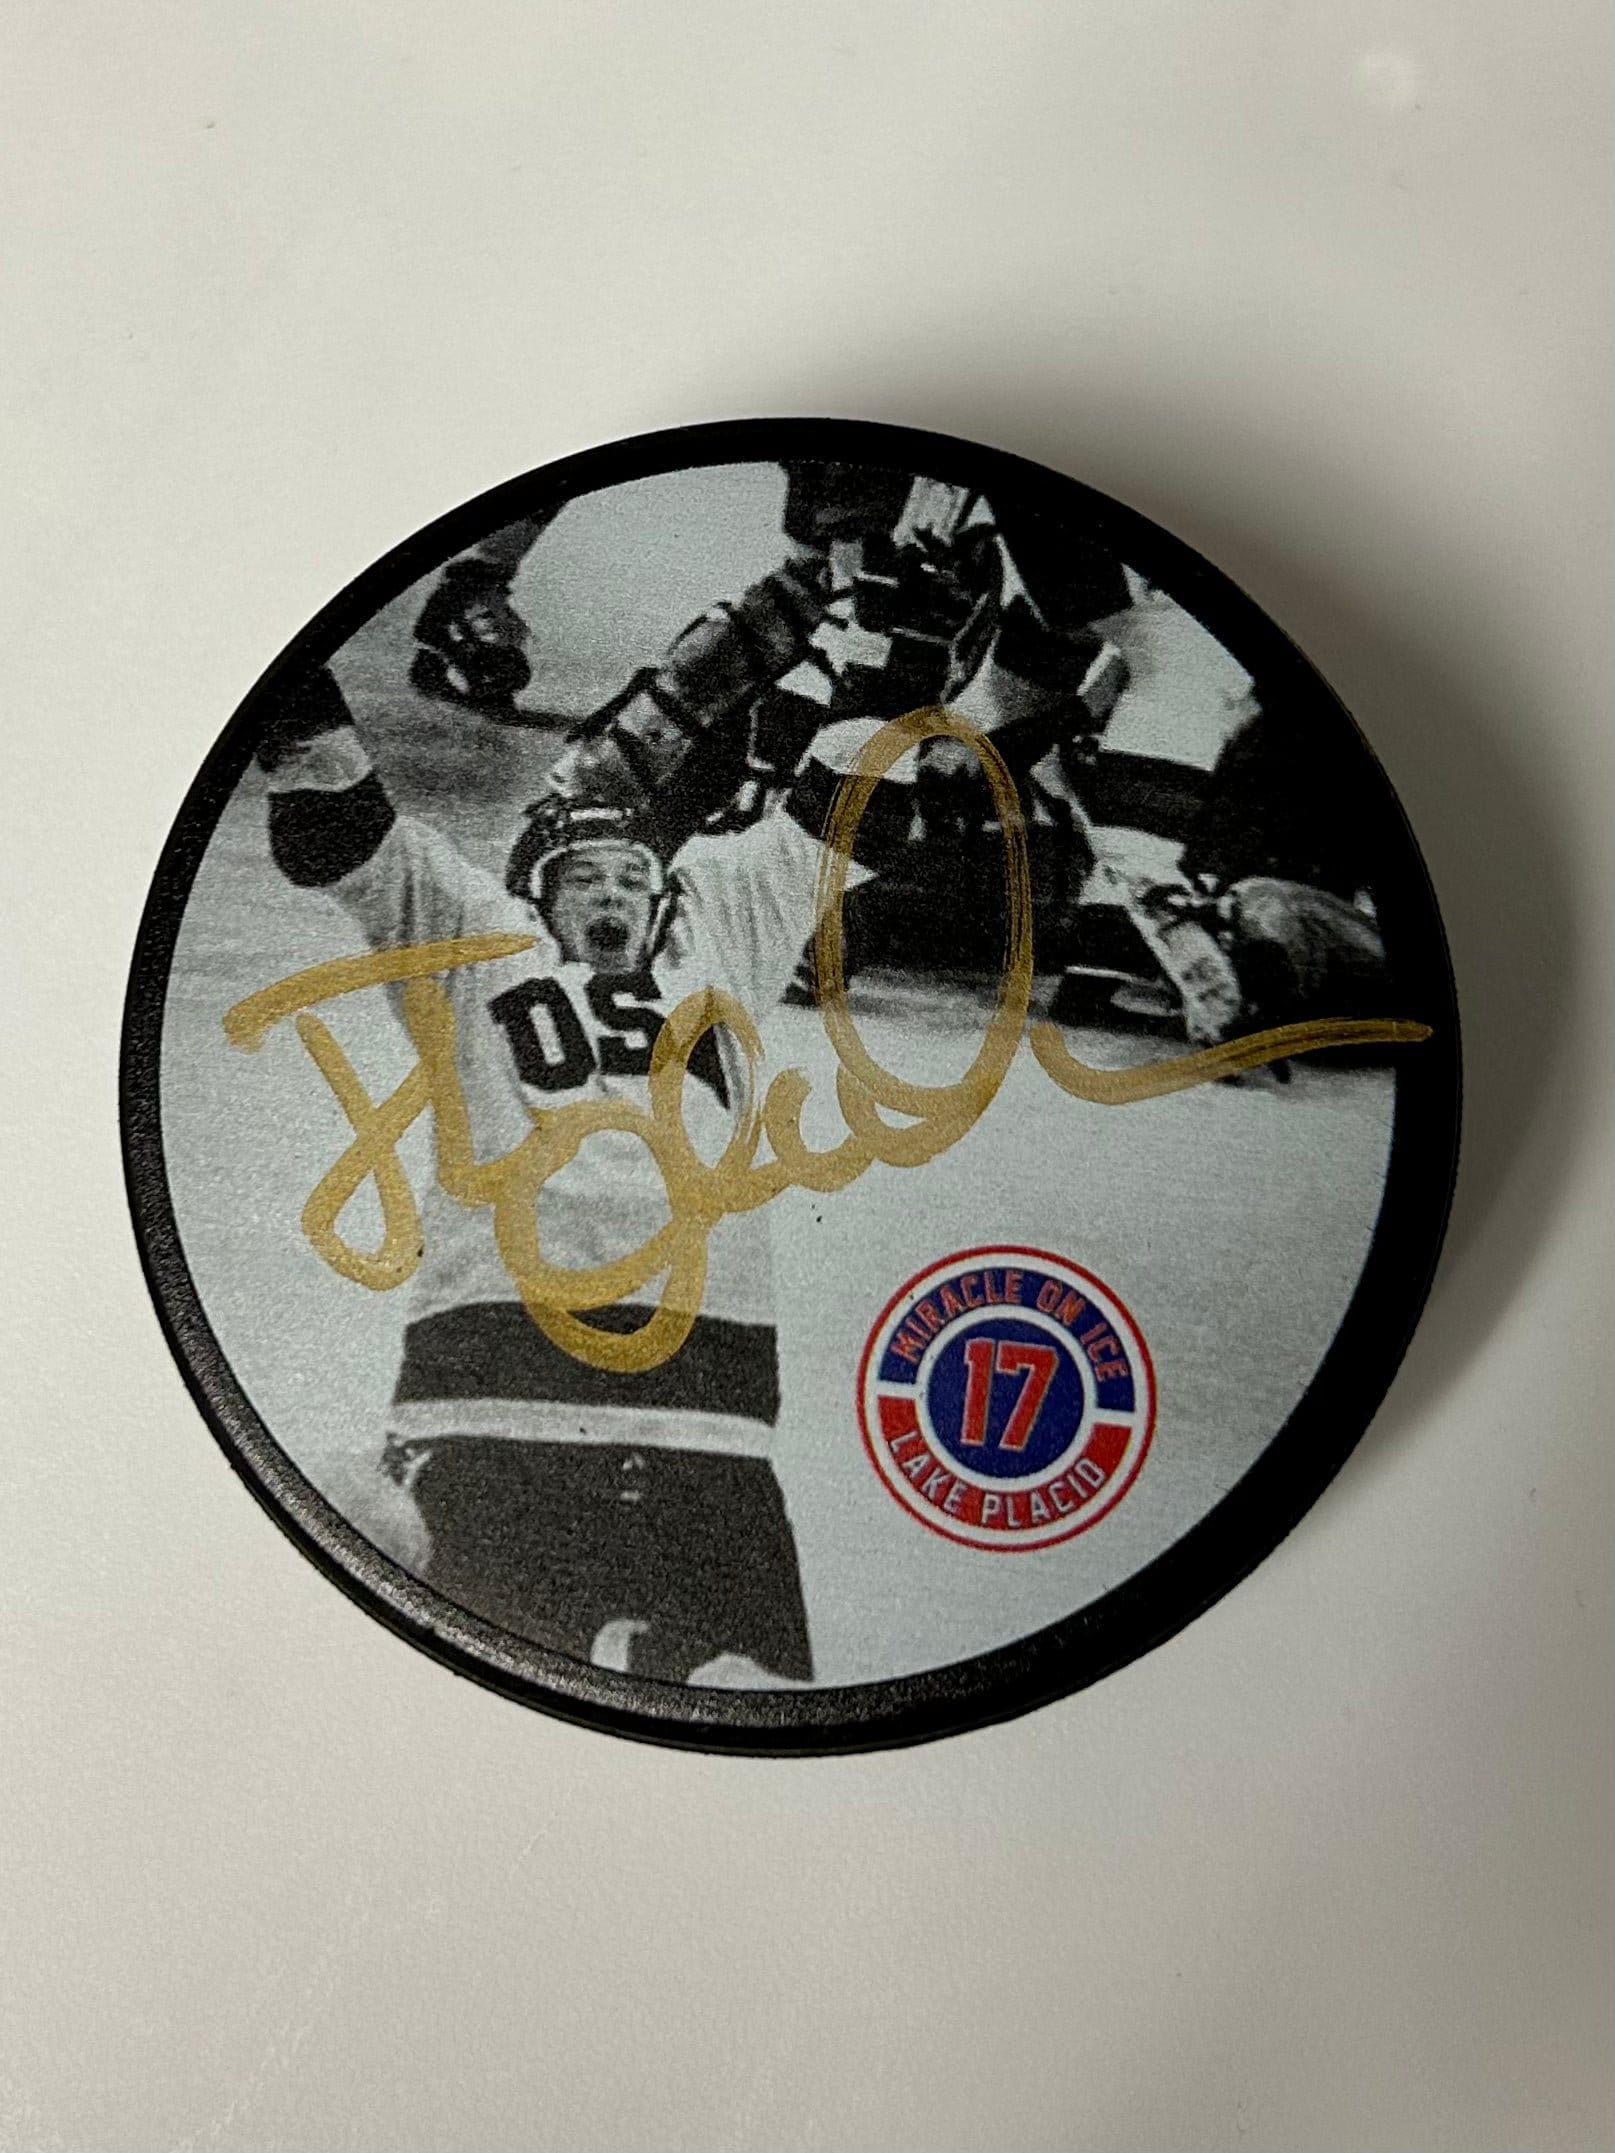 Miracle on Ice 1980 USA Hockey Team Lake Placid Jack O'Callahan Signed Gold Medal Podium Celebration Official Photo 16x20